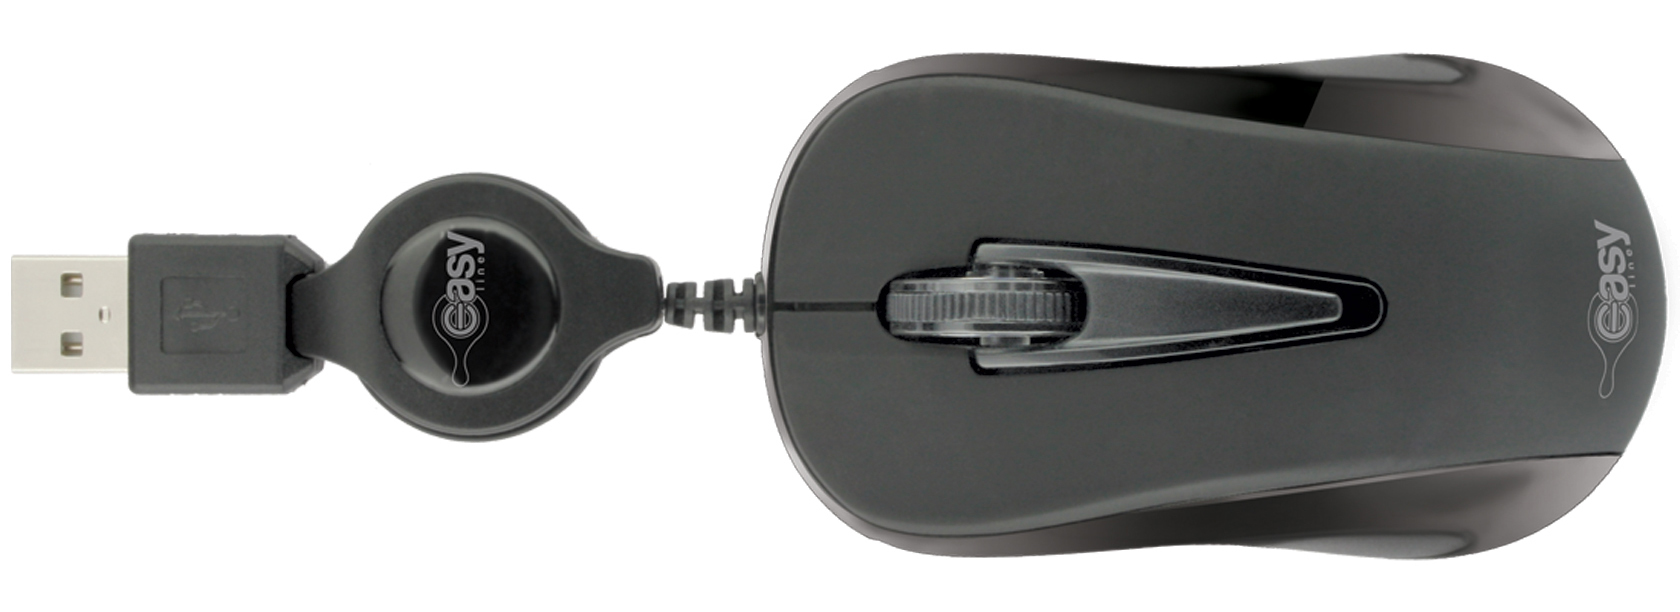 Mini Mouse Easy Line El-993346 Optico Retractil Negro